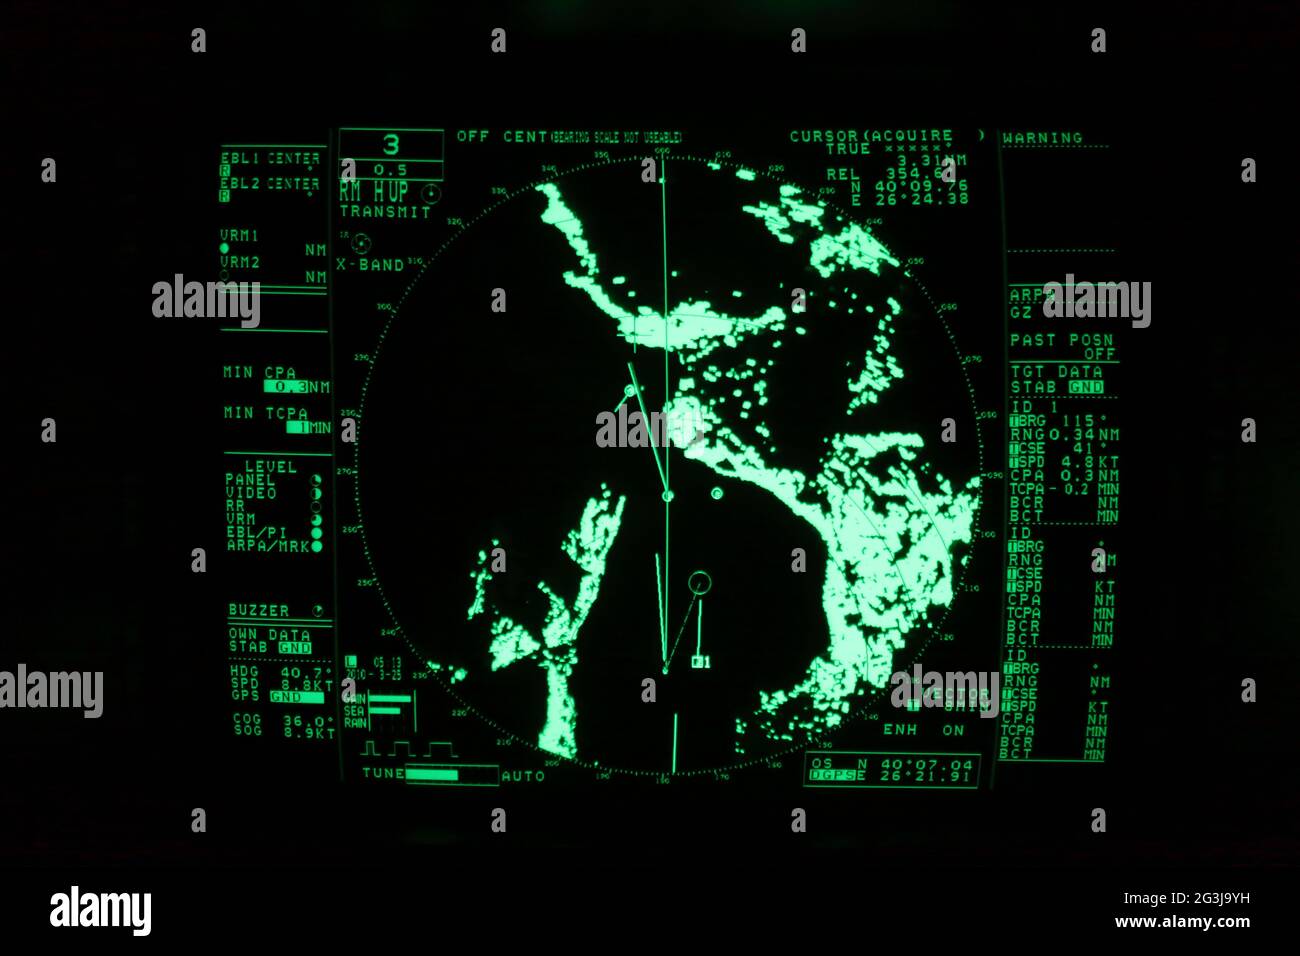 targets (vessels, ships, lands, islands, rock, route, course) on ARPA radar display at Dardanelles strait Stock Photo